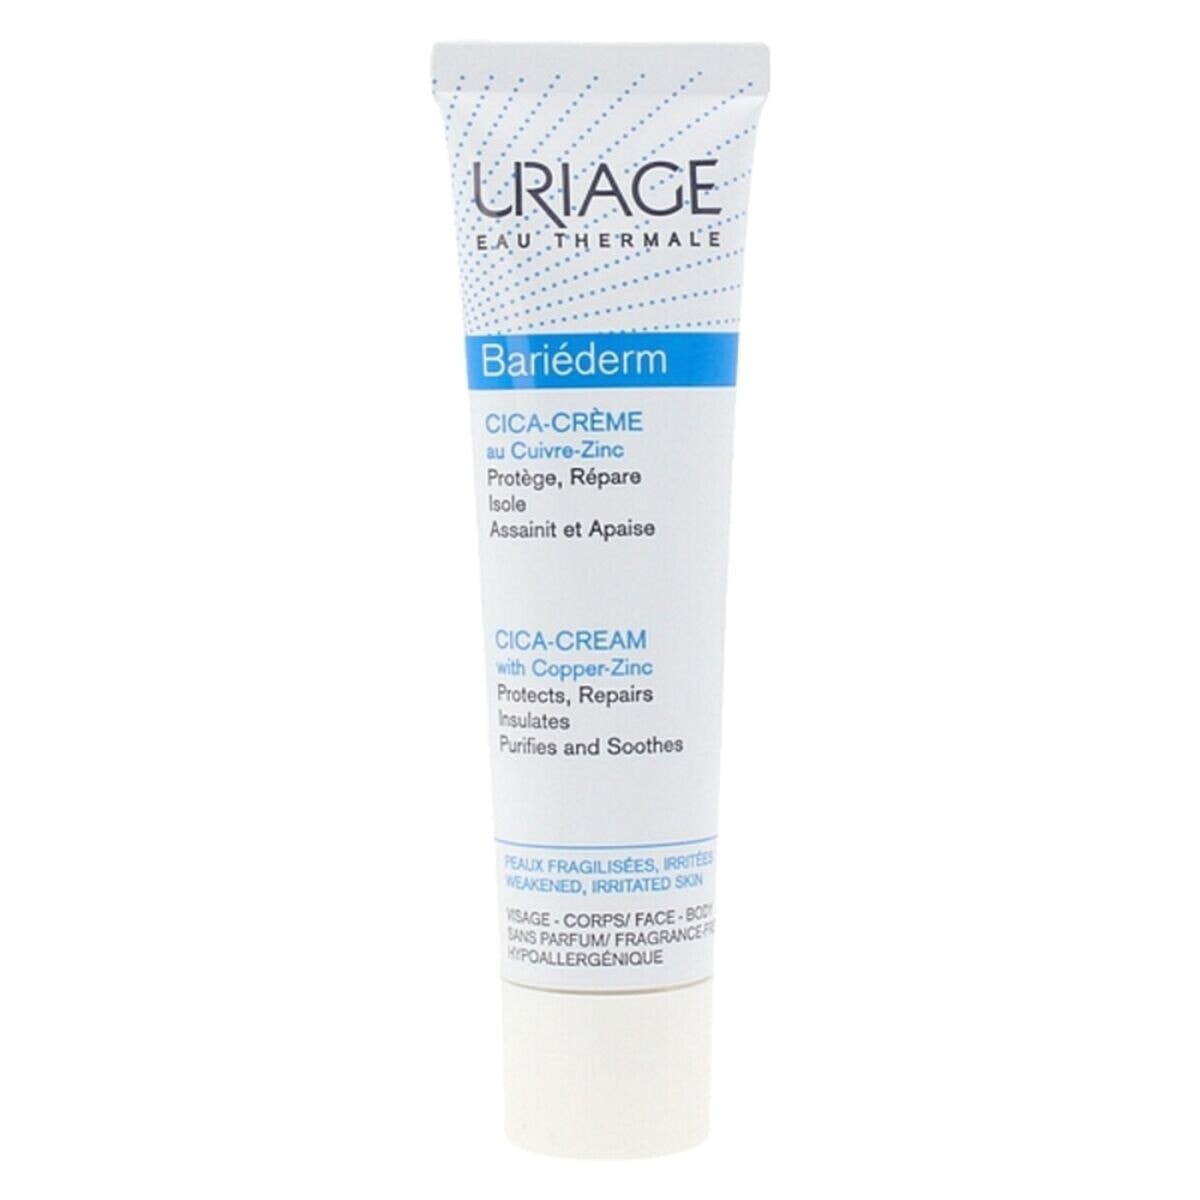 Facial Cream Uriage 10004381 40 ml